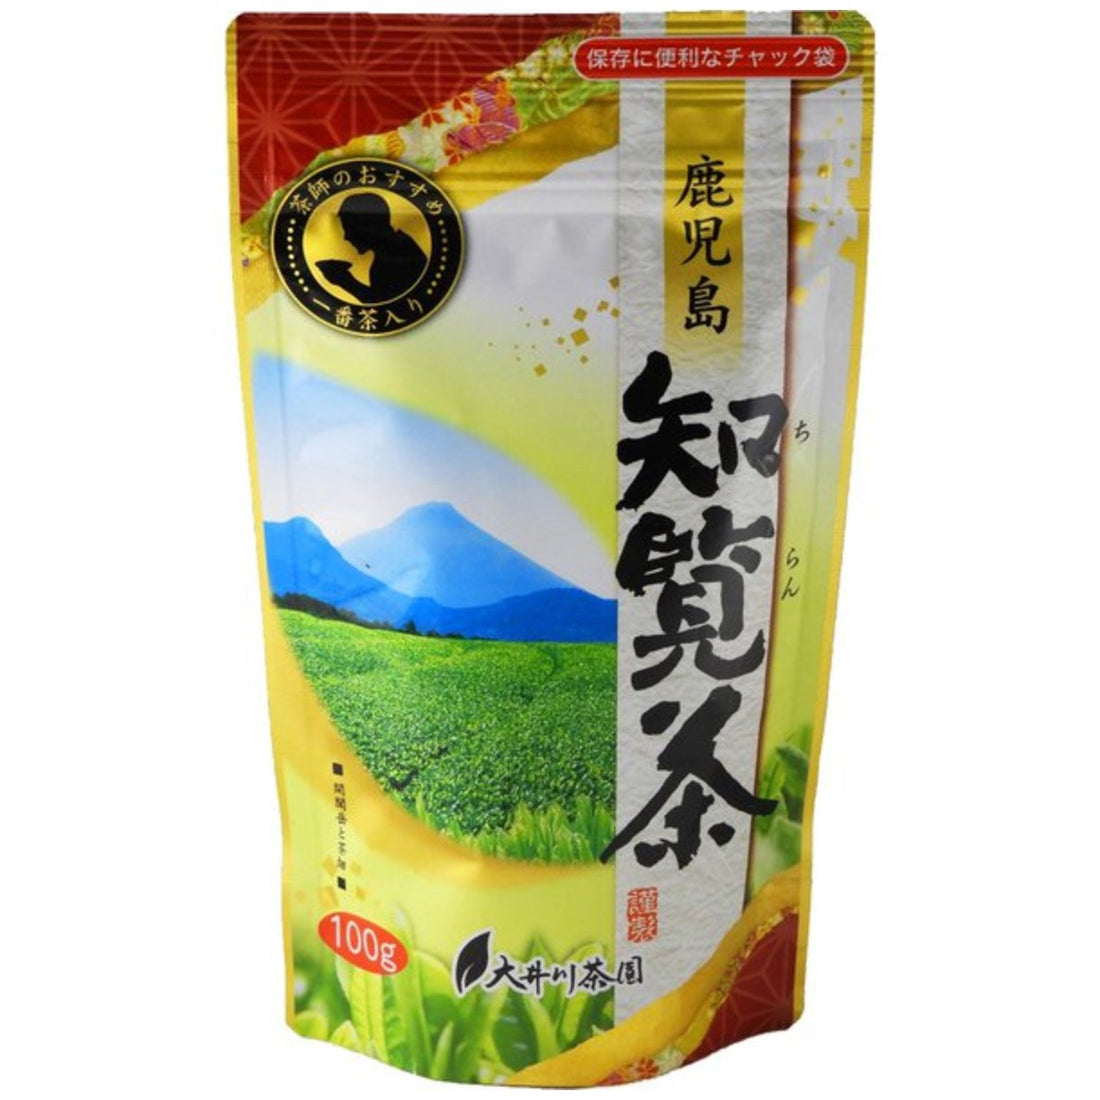 Oigawa Tea Garden Tea Master&